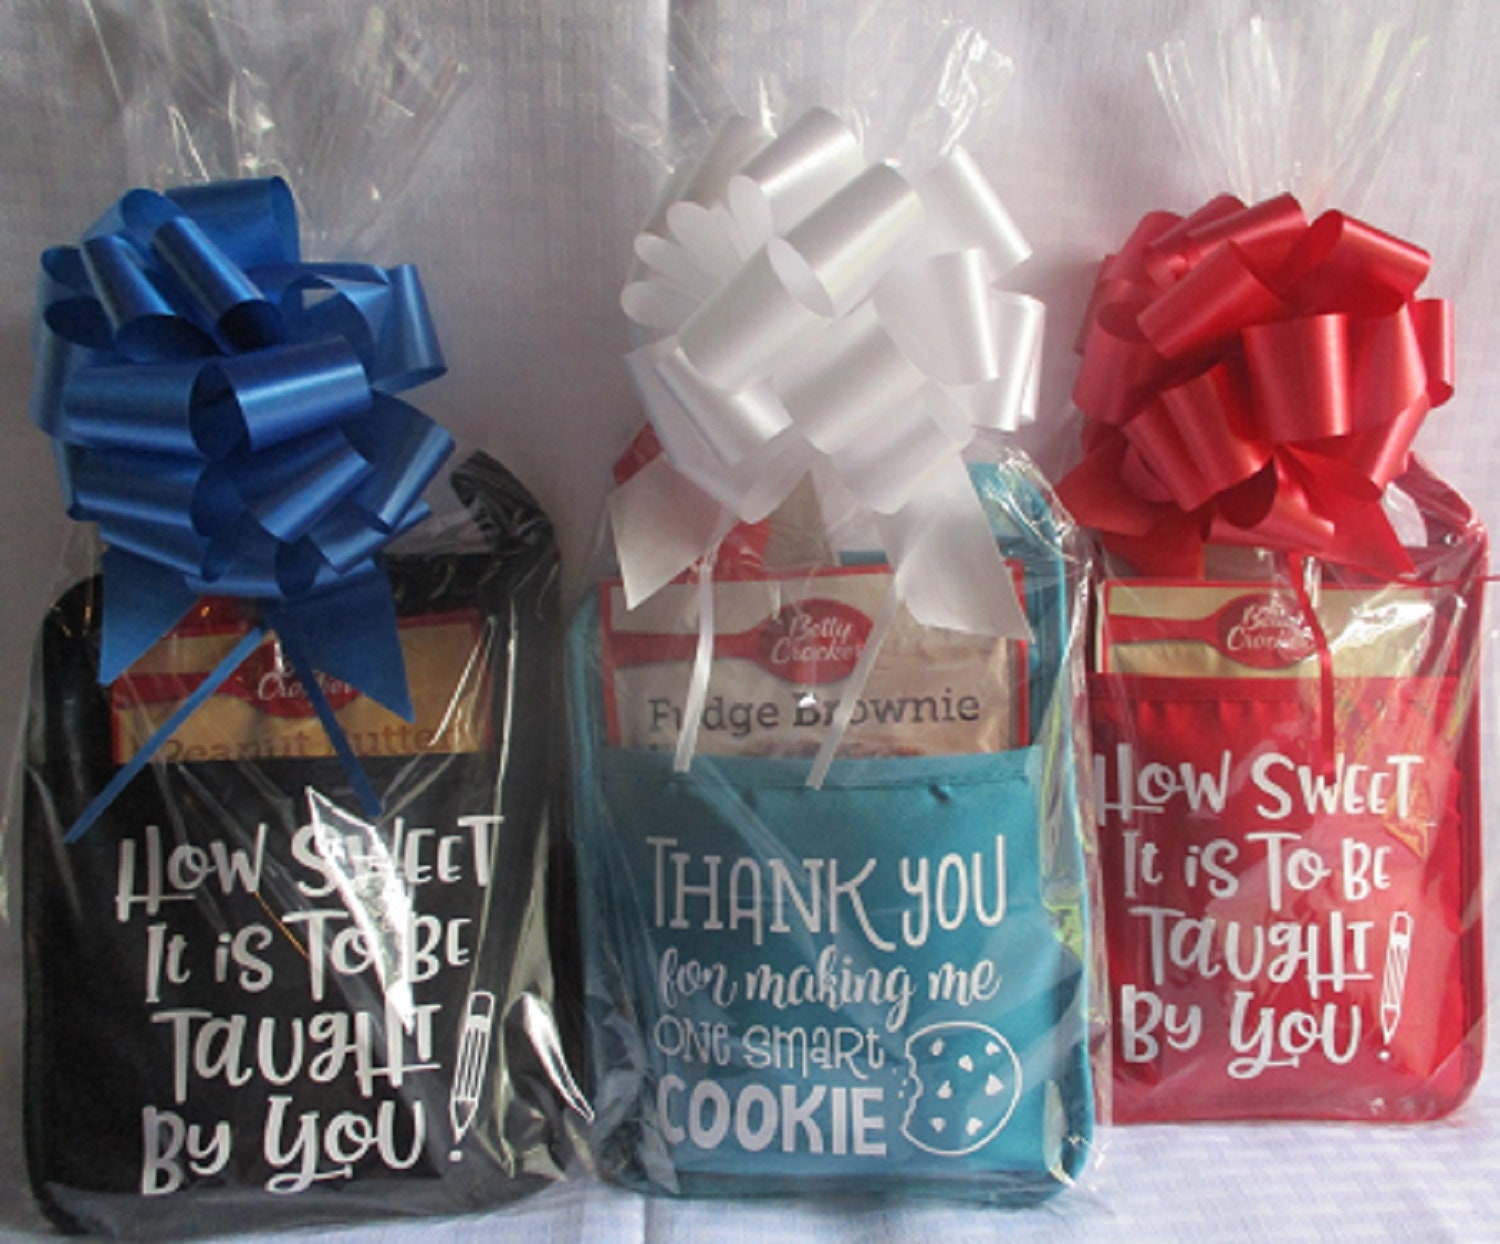 Oven Mitt “Smart Cookie” Teacher Gift Idea - Just Add Confetti